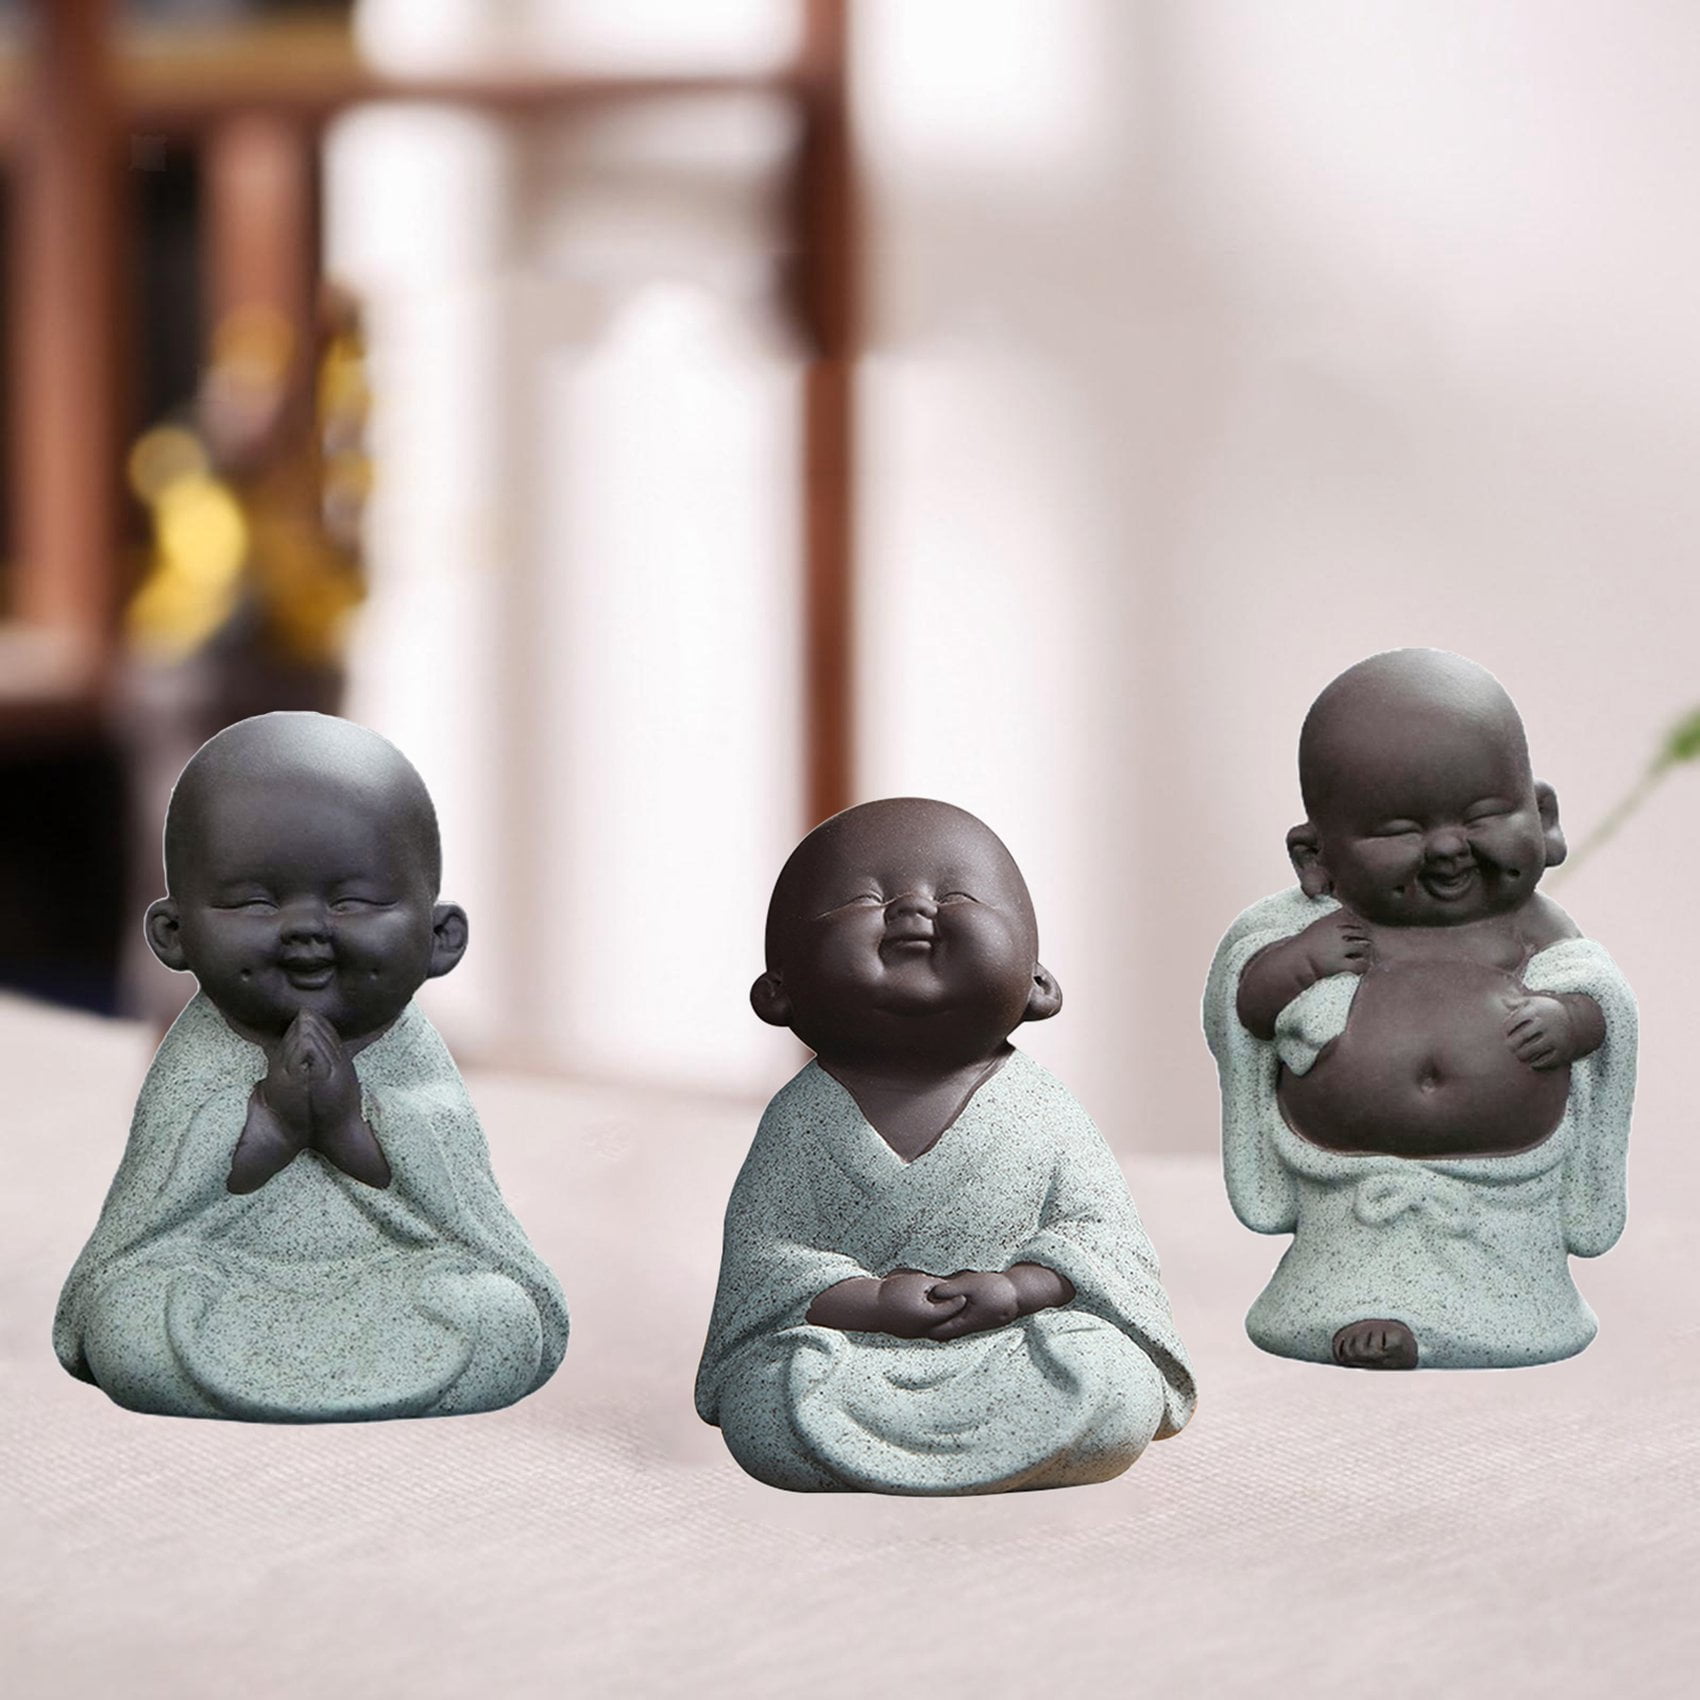 Ceramic Little Cute Baby Buddha Statue Figurine Buddha Figurines Home Decor  Creative Baby Crafts Dolls Ornaments C